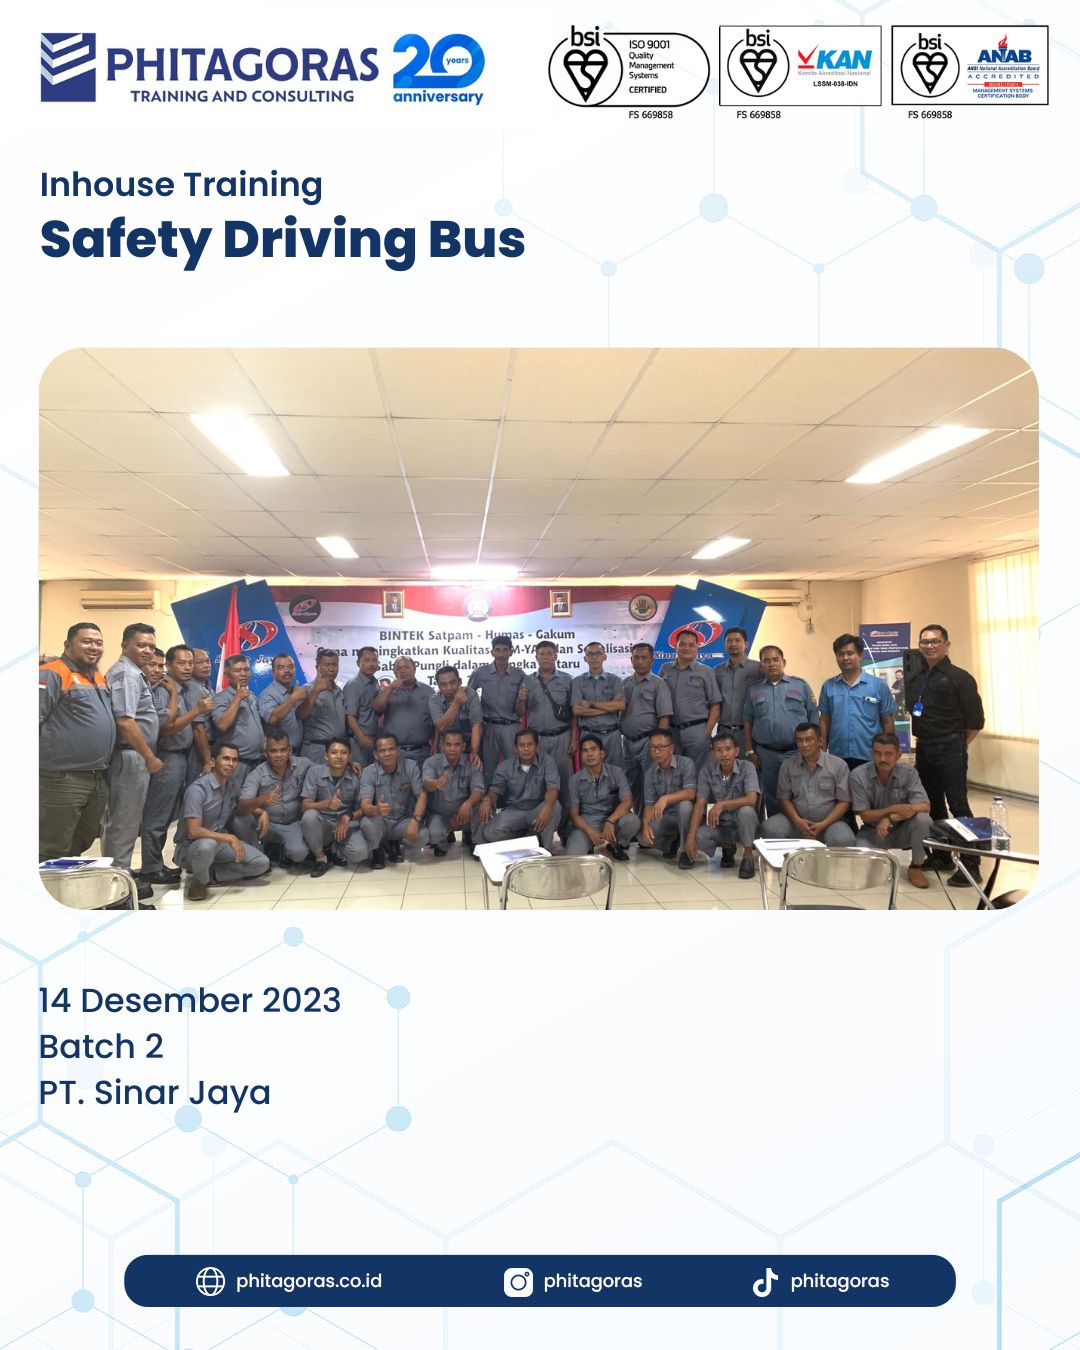 Inhouse Training Safety Driving Bus - PT. Sinar Jaya Batch 2